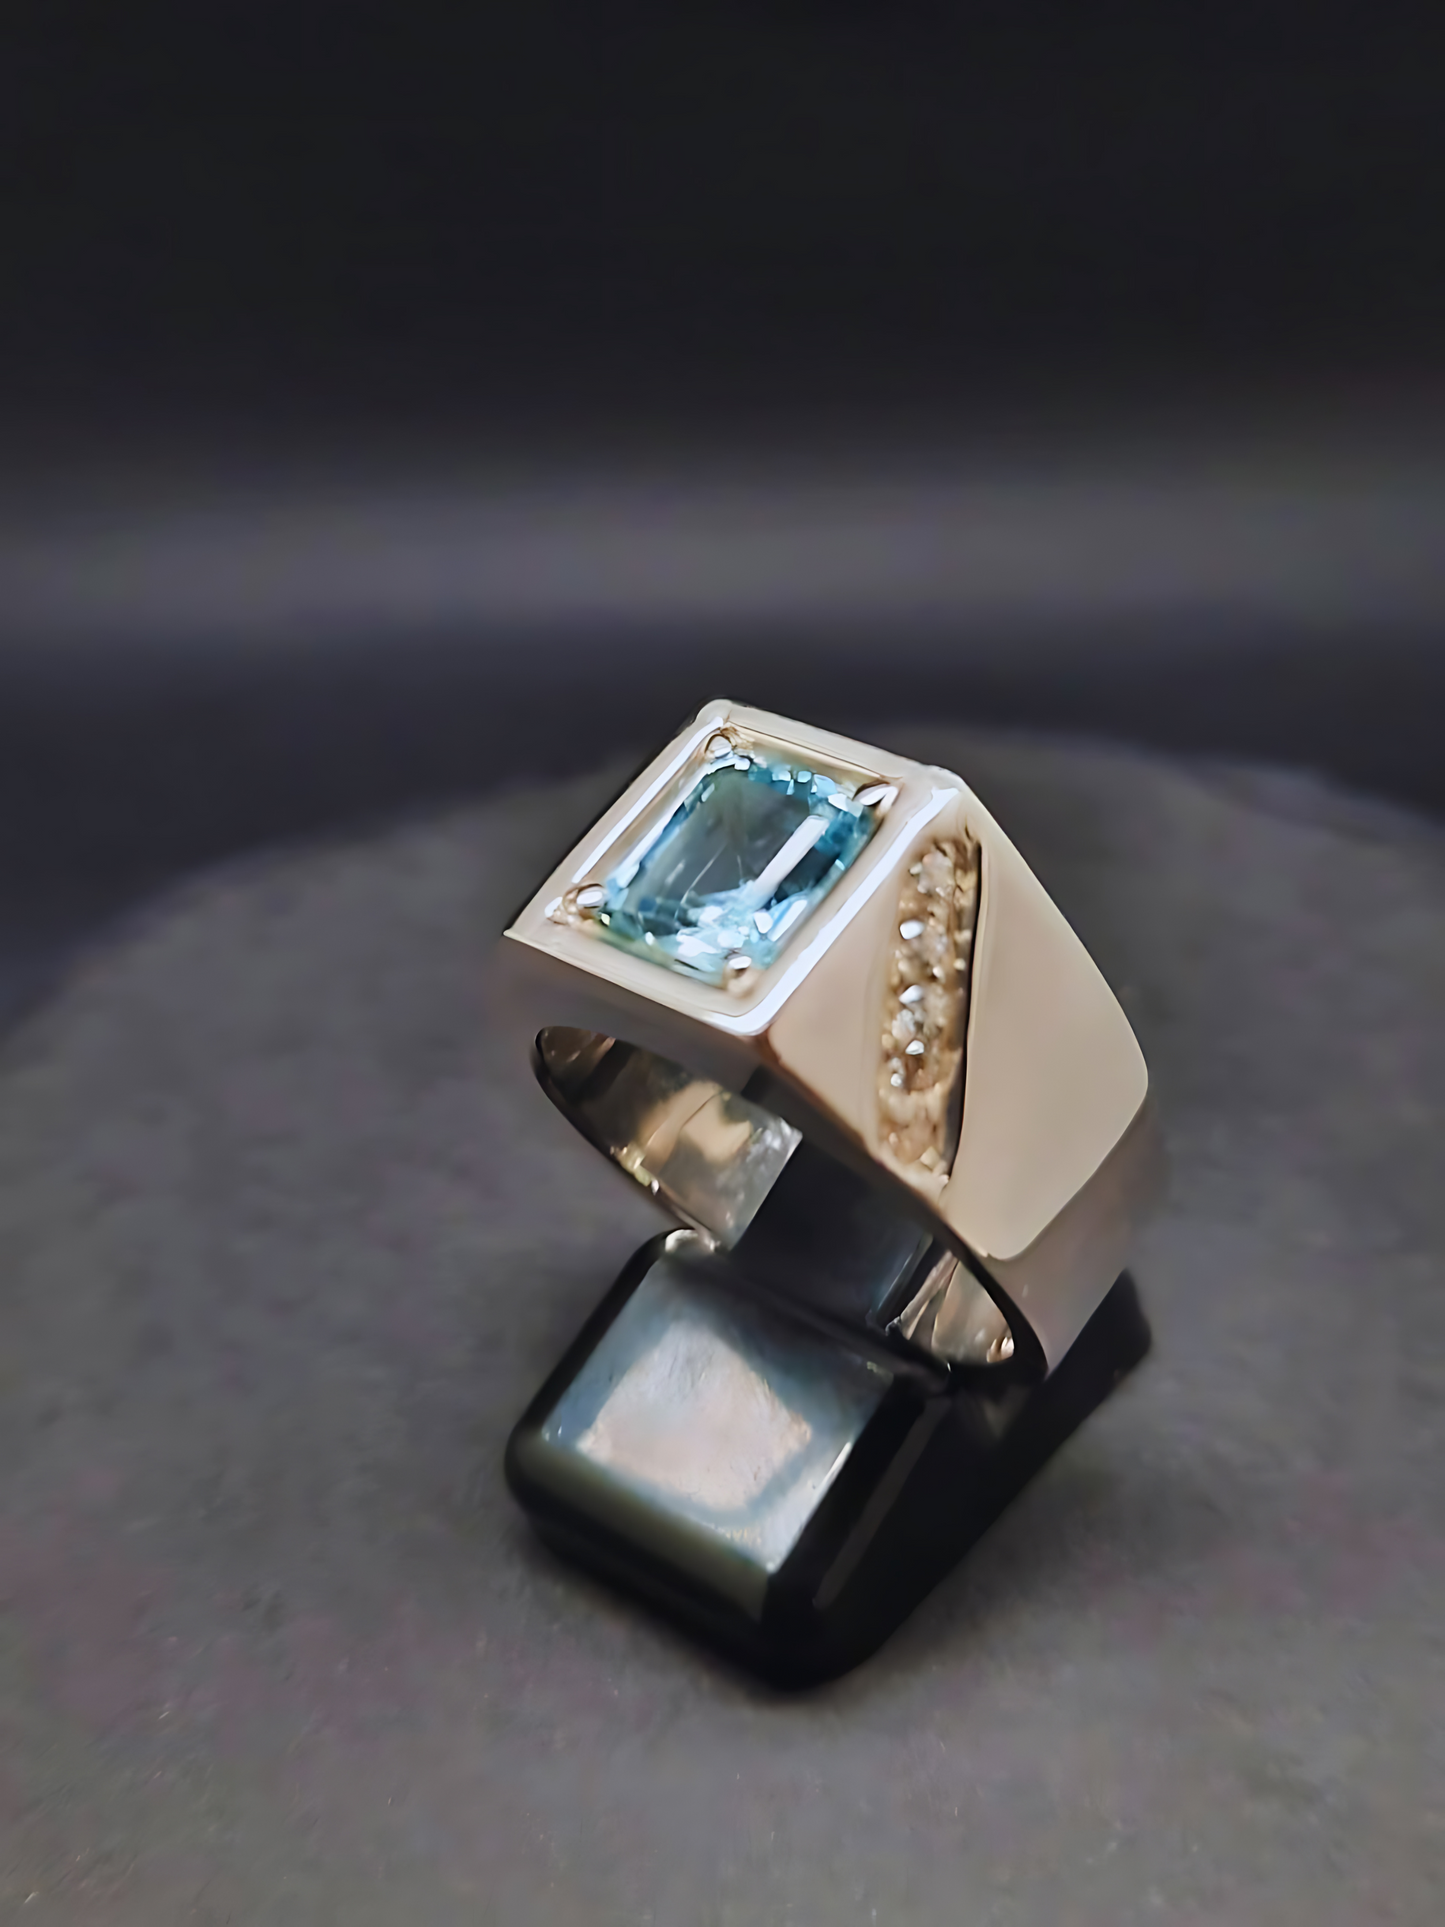 Handmade 18K white gold ring 1.7 ct. natural Aquamarine & natural Vvs1 high quality Diamonds.